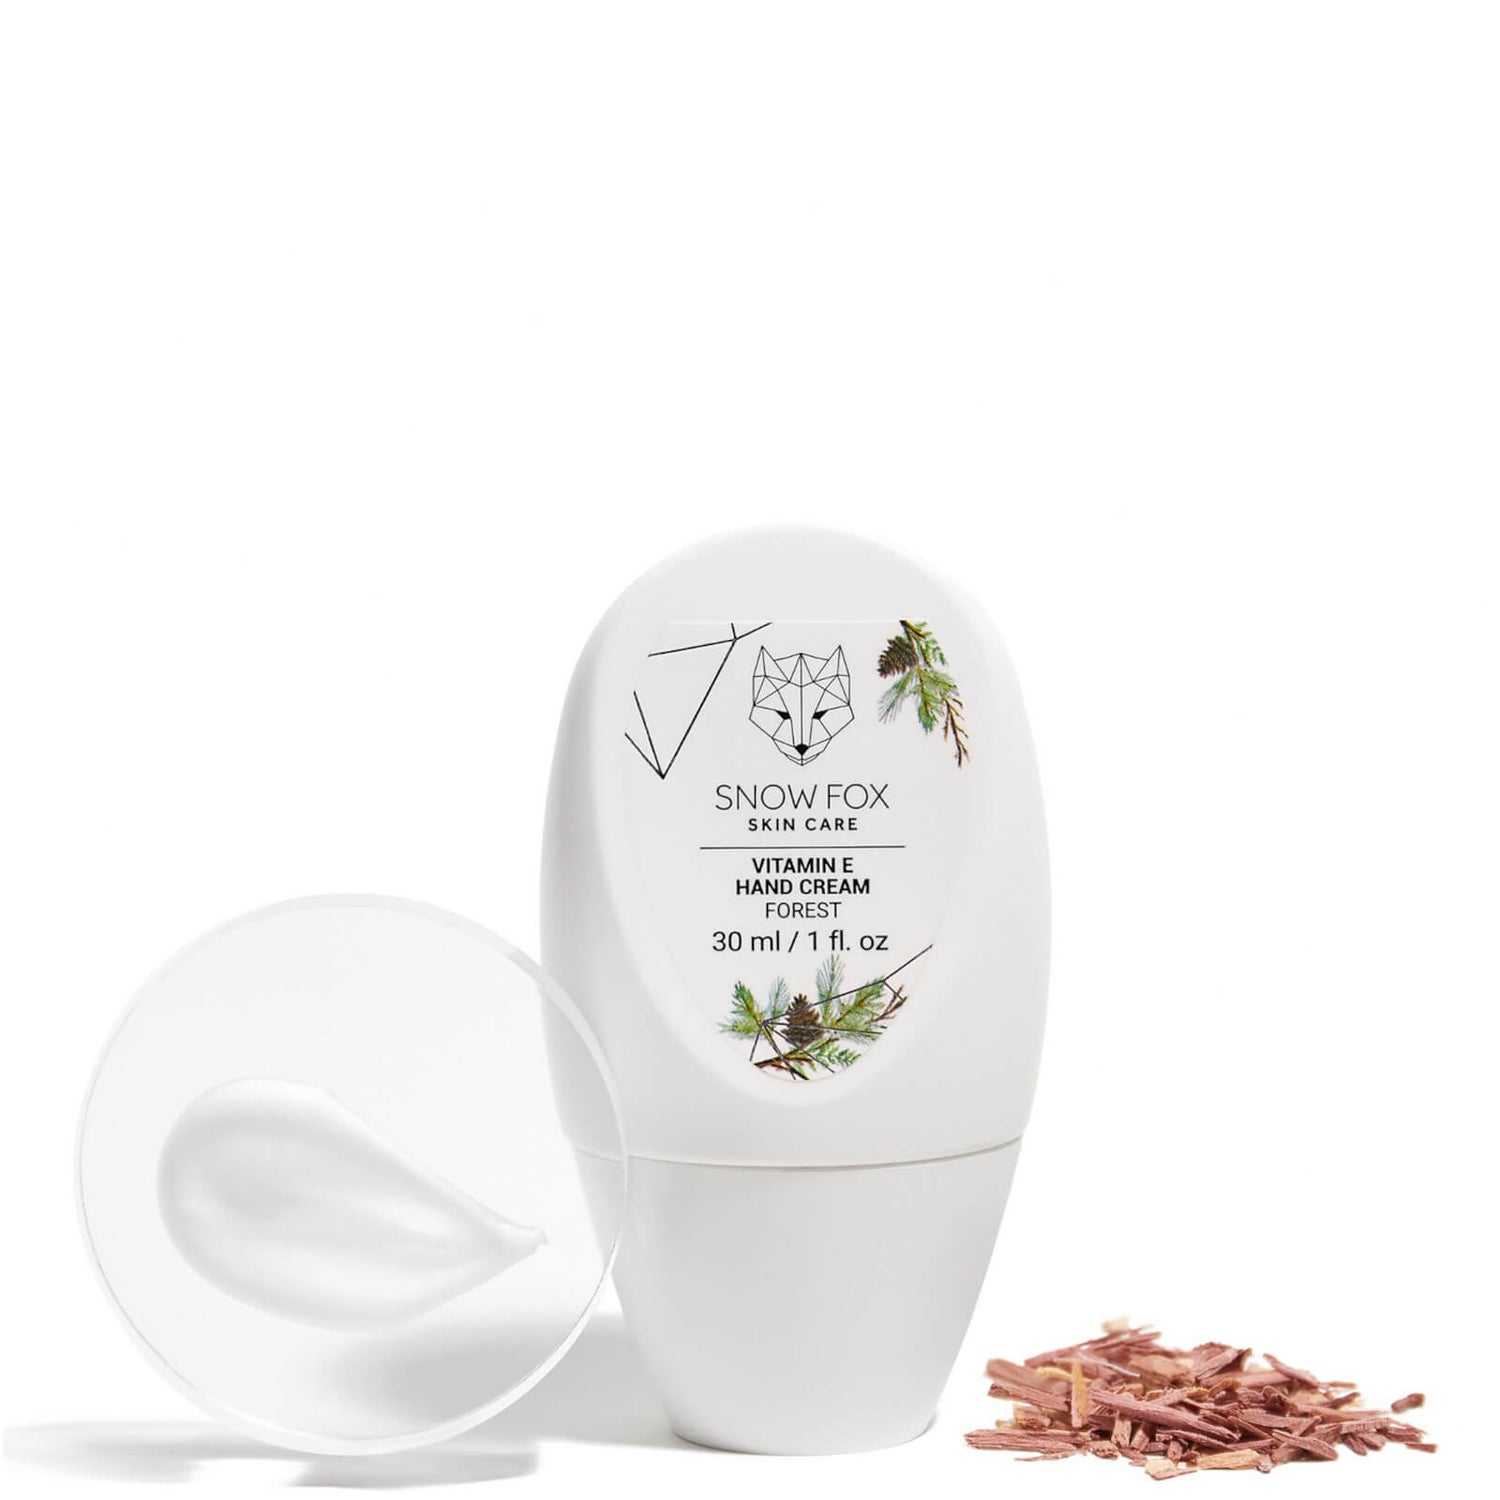 Snow Fox Skincare Vitamin E Hand Cream 1 oz - Forest